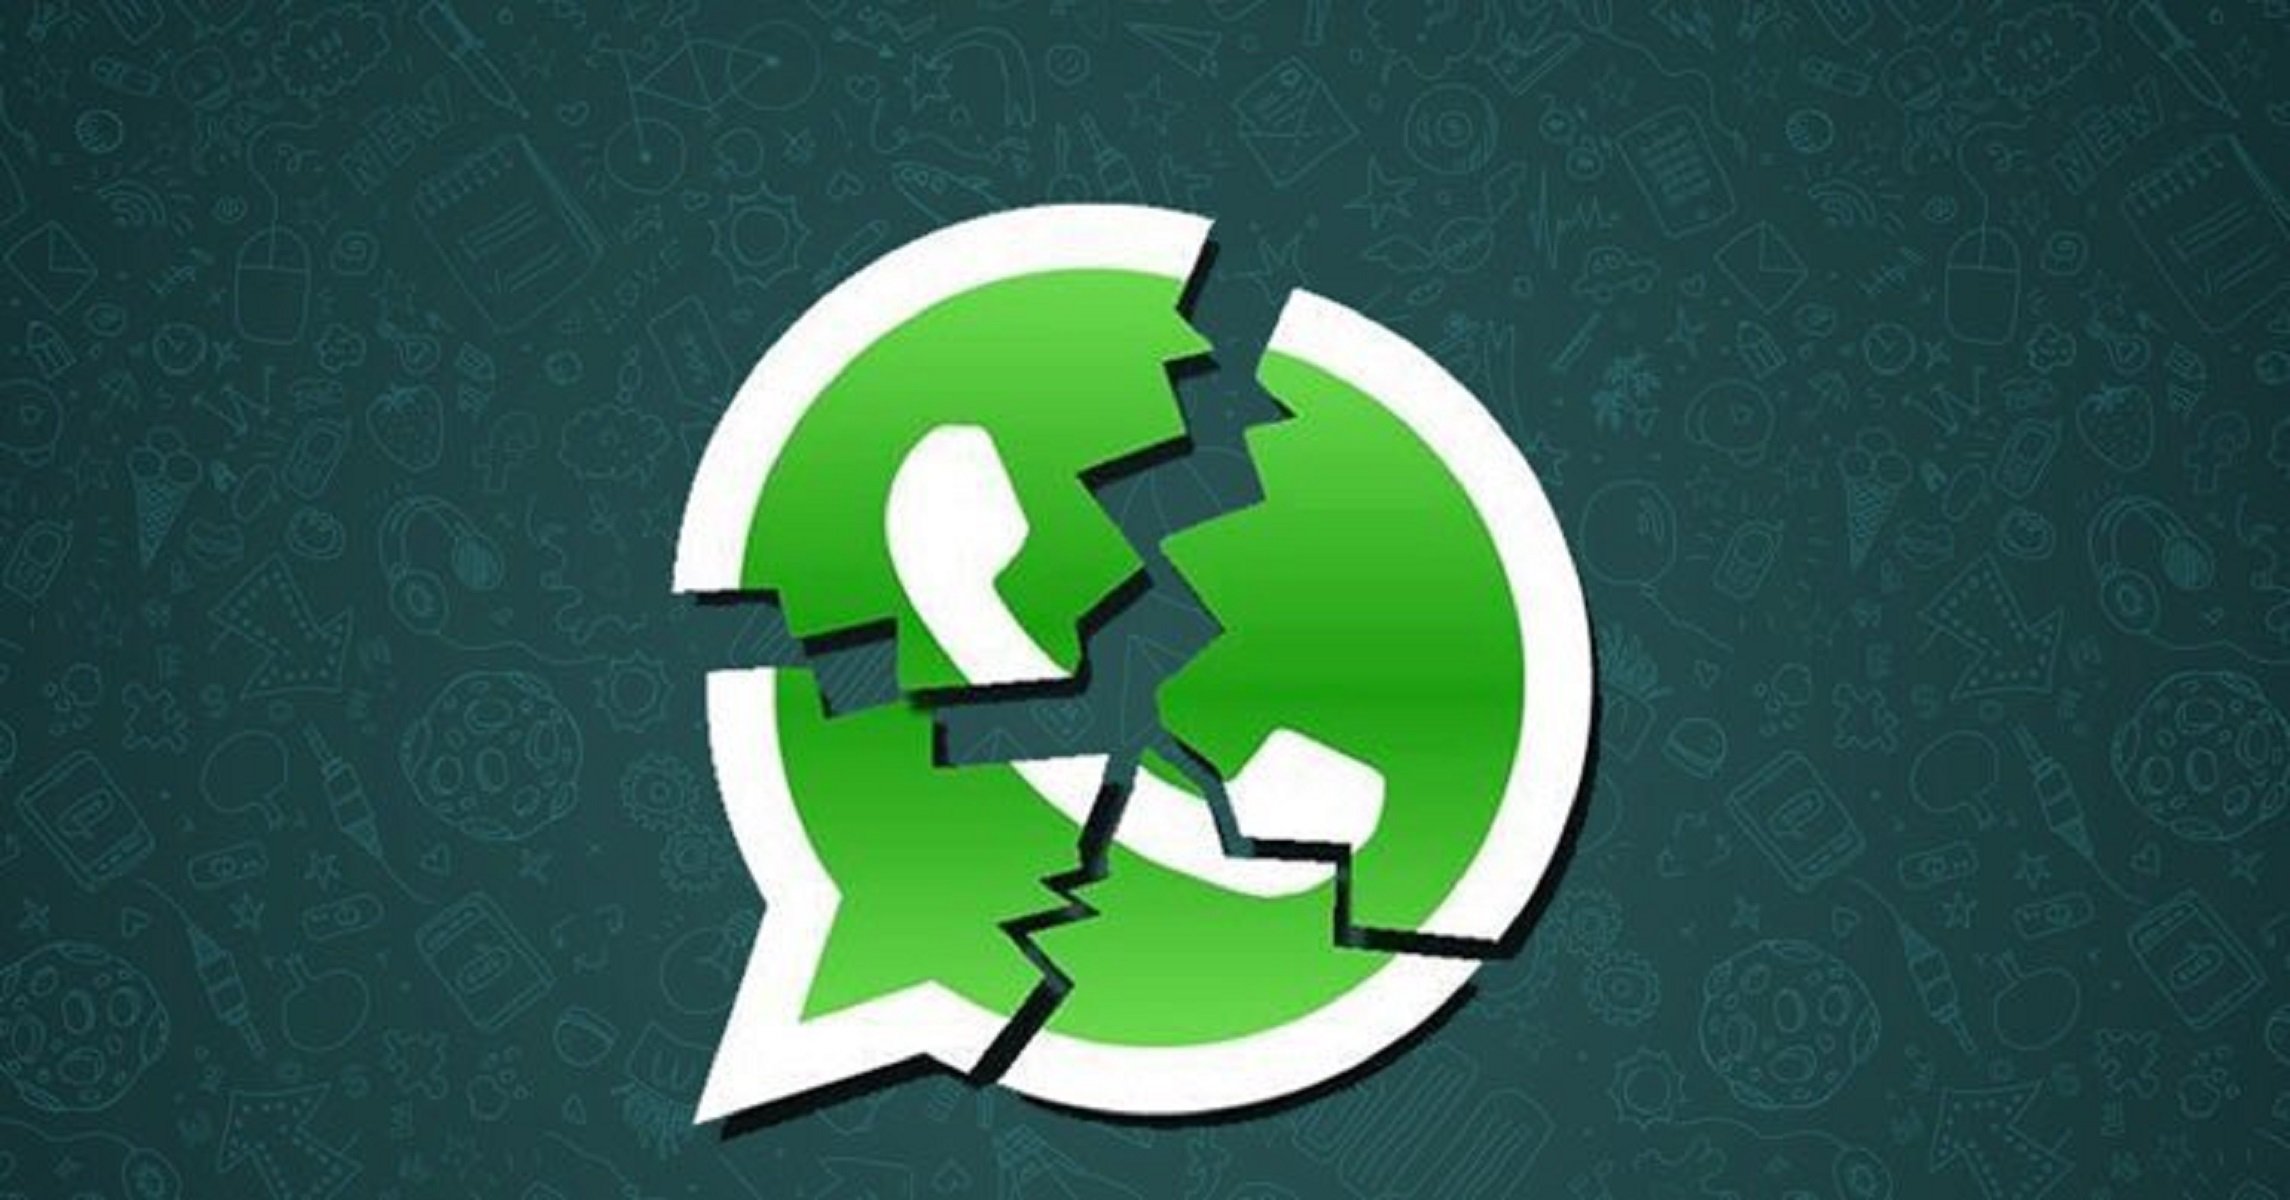 Cae WhatsApp a nivel mundial